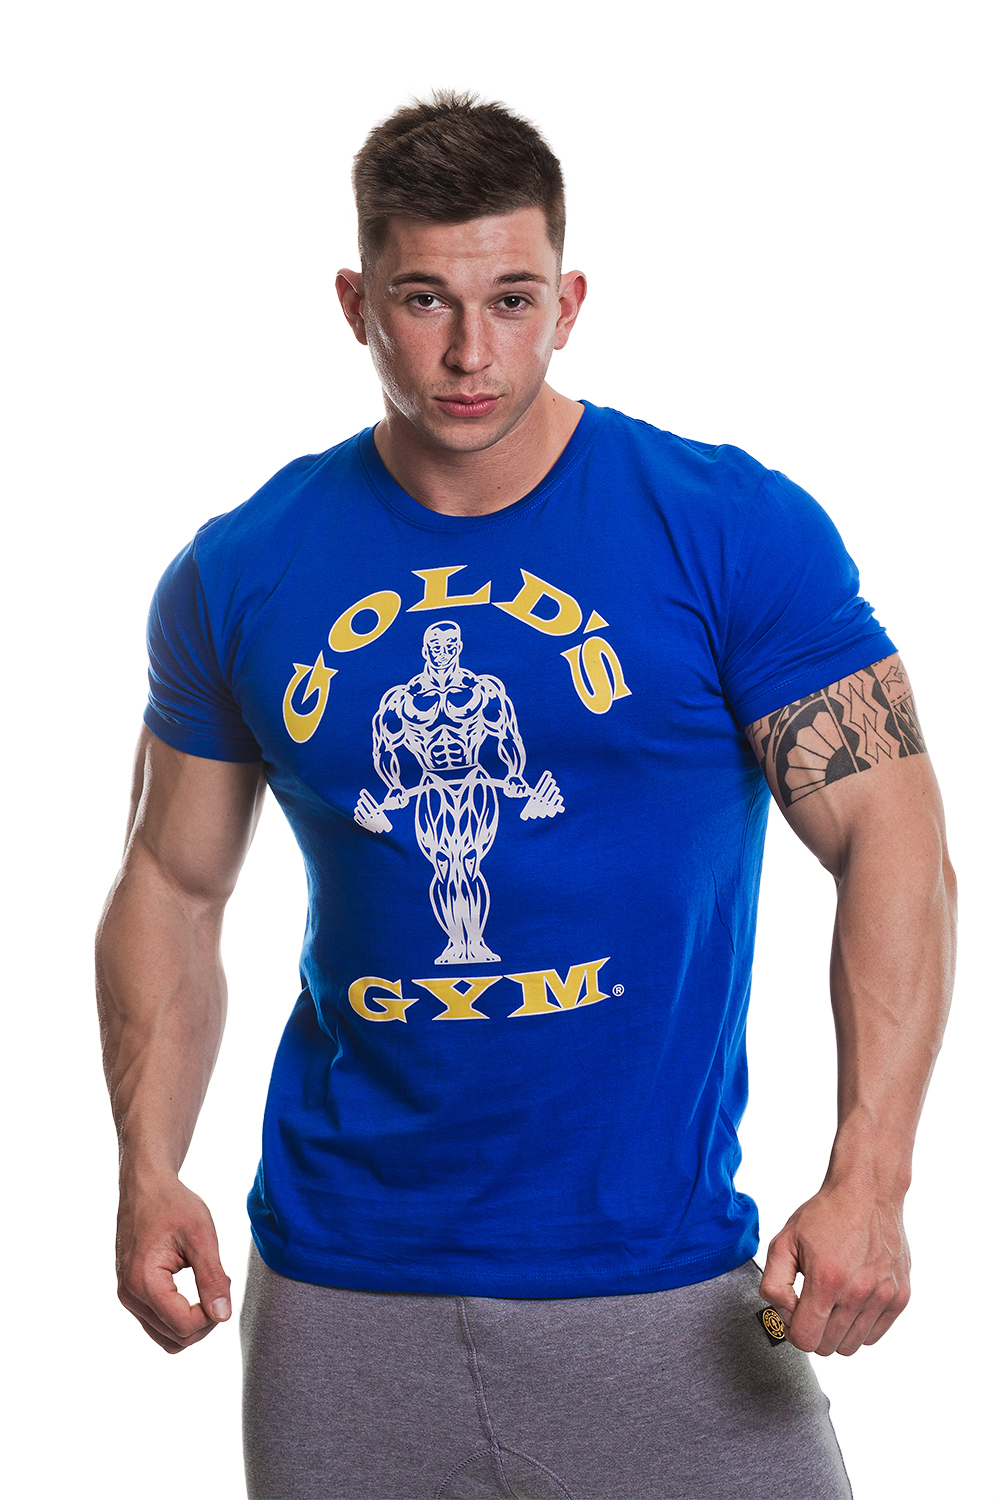 Golds Gym 2018 Muscle Joe Fitness Short Sleeve T-Shirt Mens Training Sport Tee